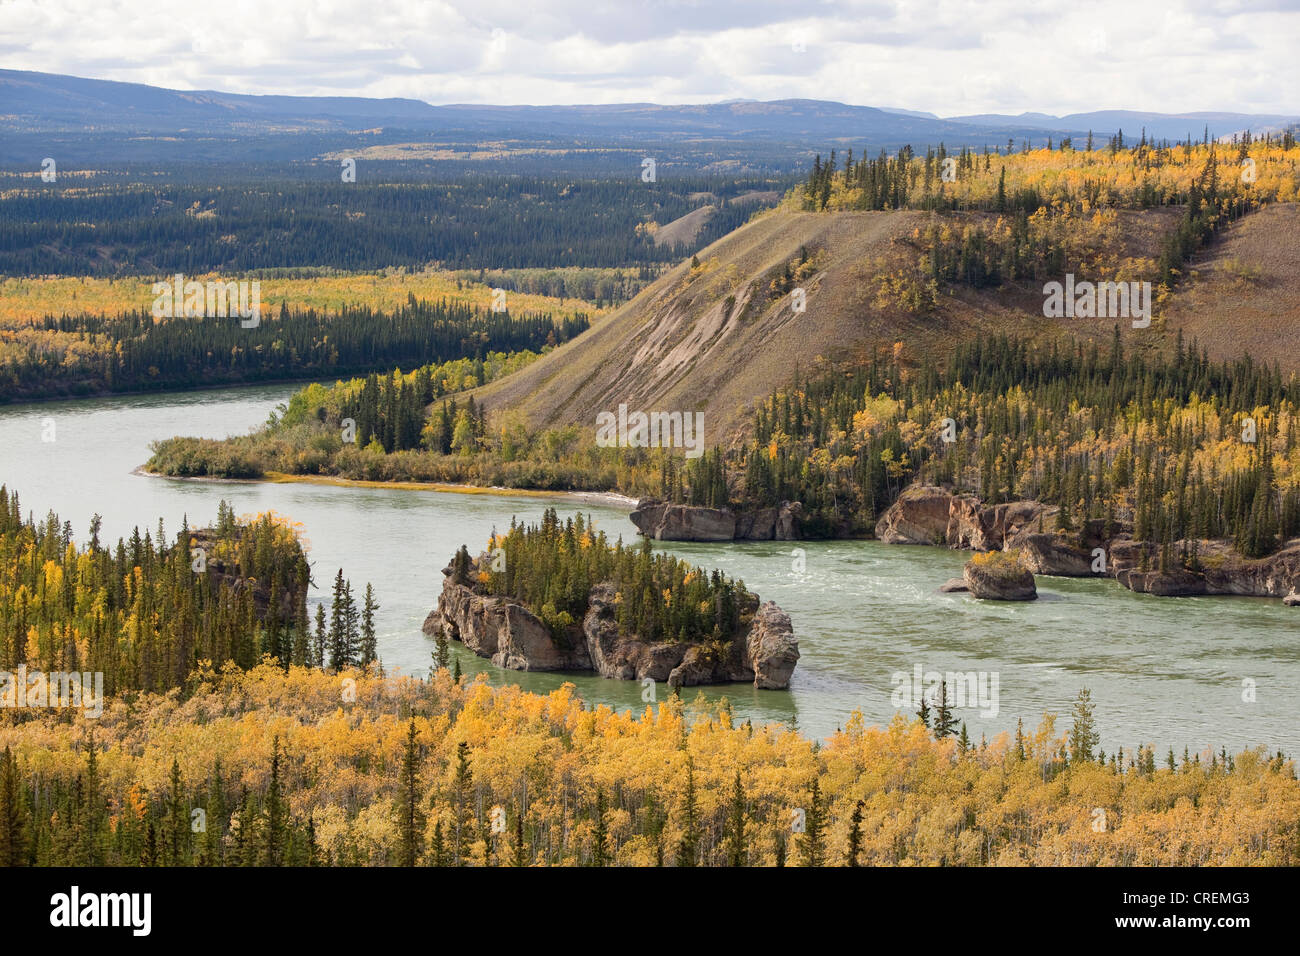 Fife Finger Rapids, Indian Summer, Herbstlaub, in Herbstfarben, Yukon River in der Nähe von Carmacks, Yukon Territorium, Kanada Stockfoto